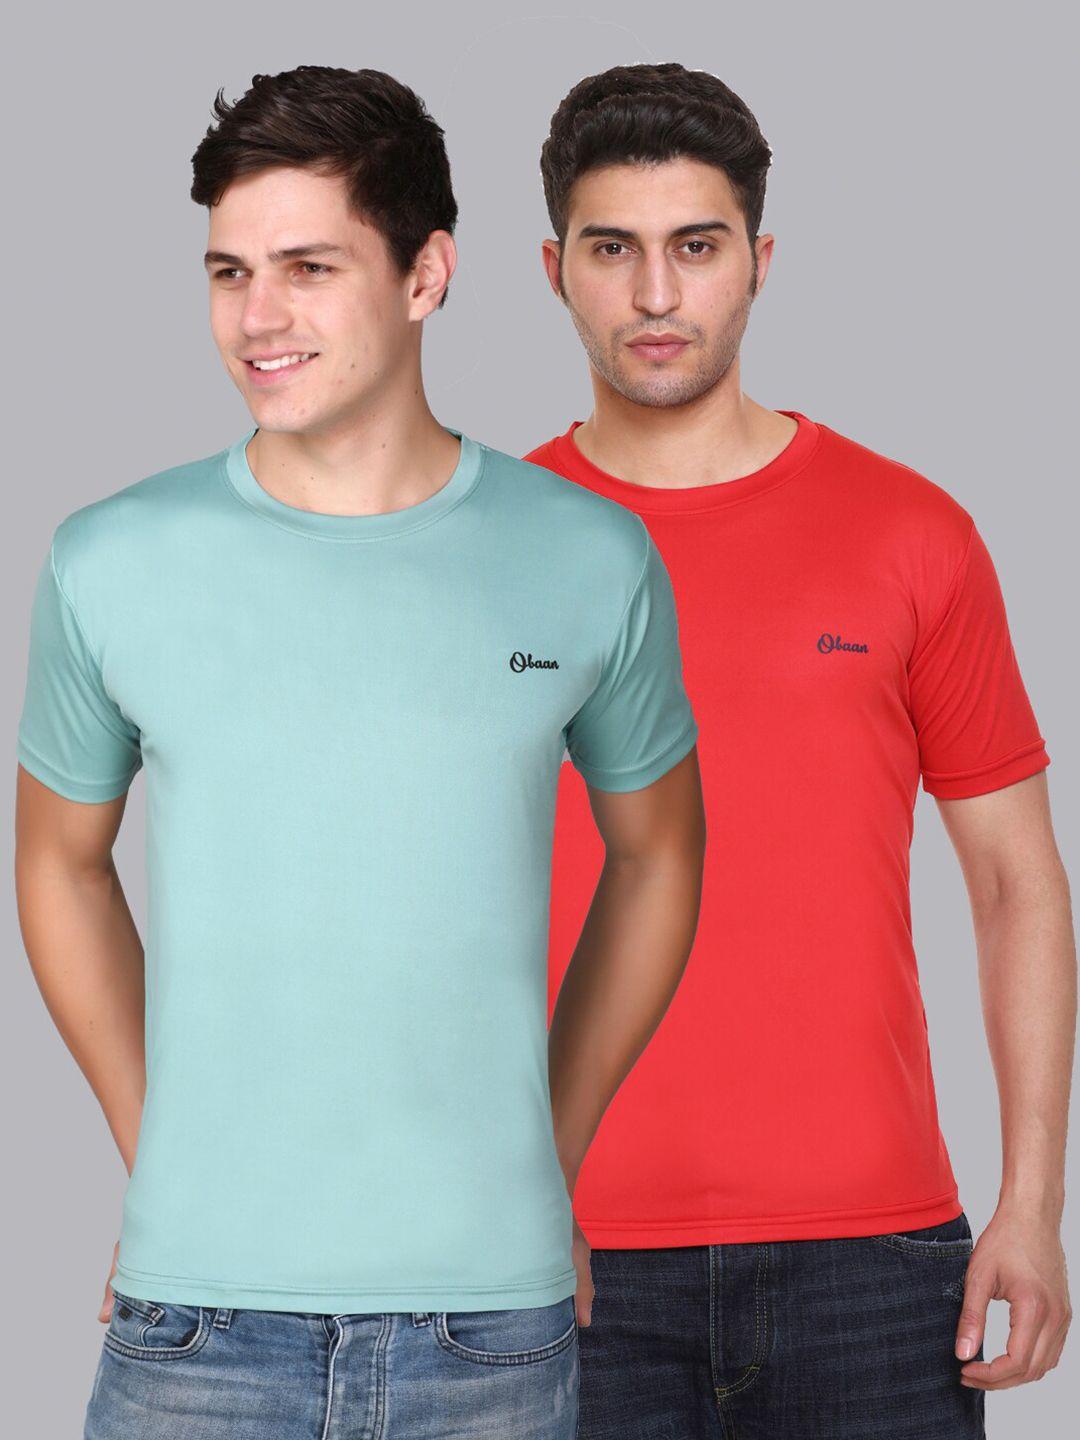 obaan men mint green & red set of 2 dri-fit training or gym t-shirt